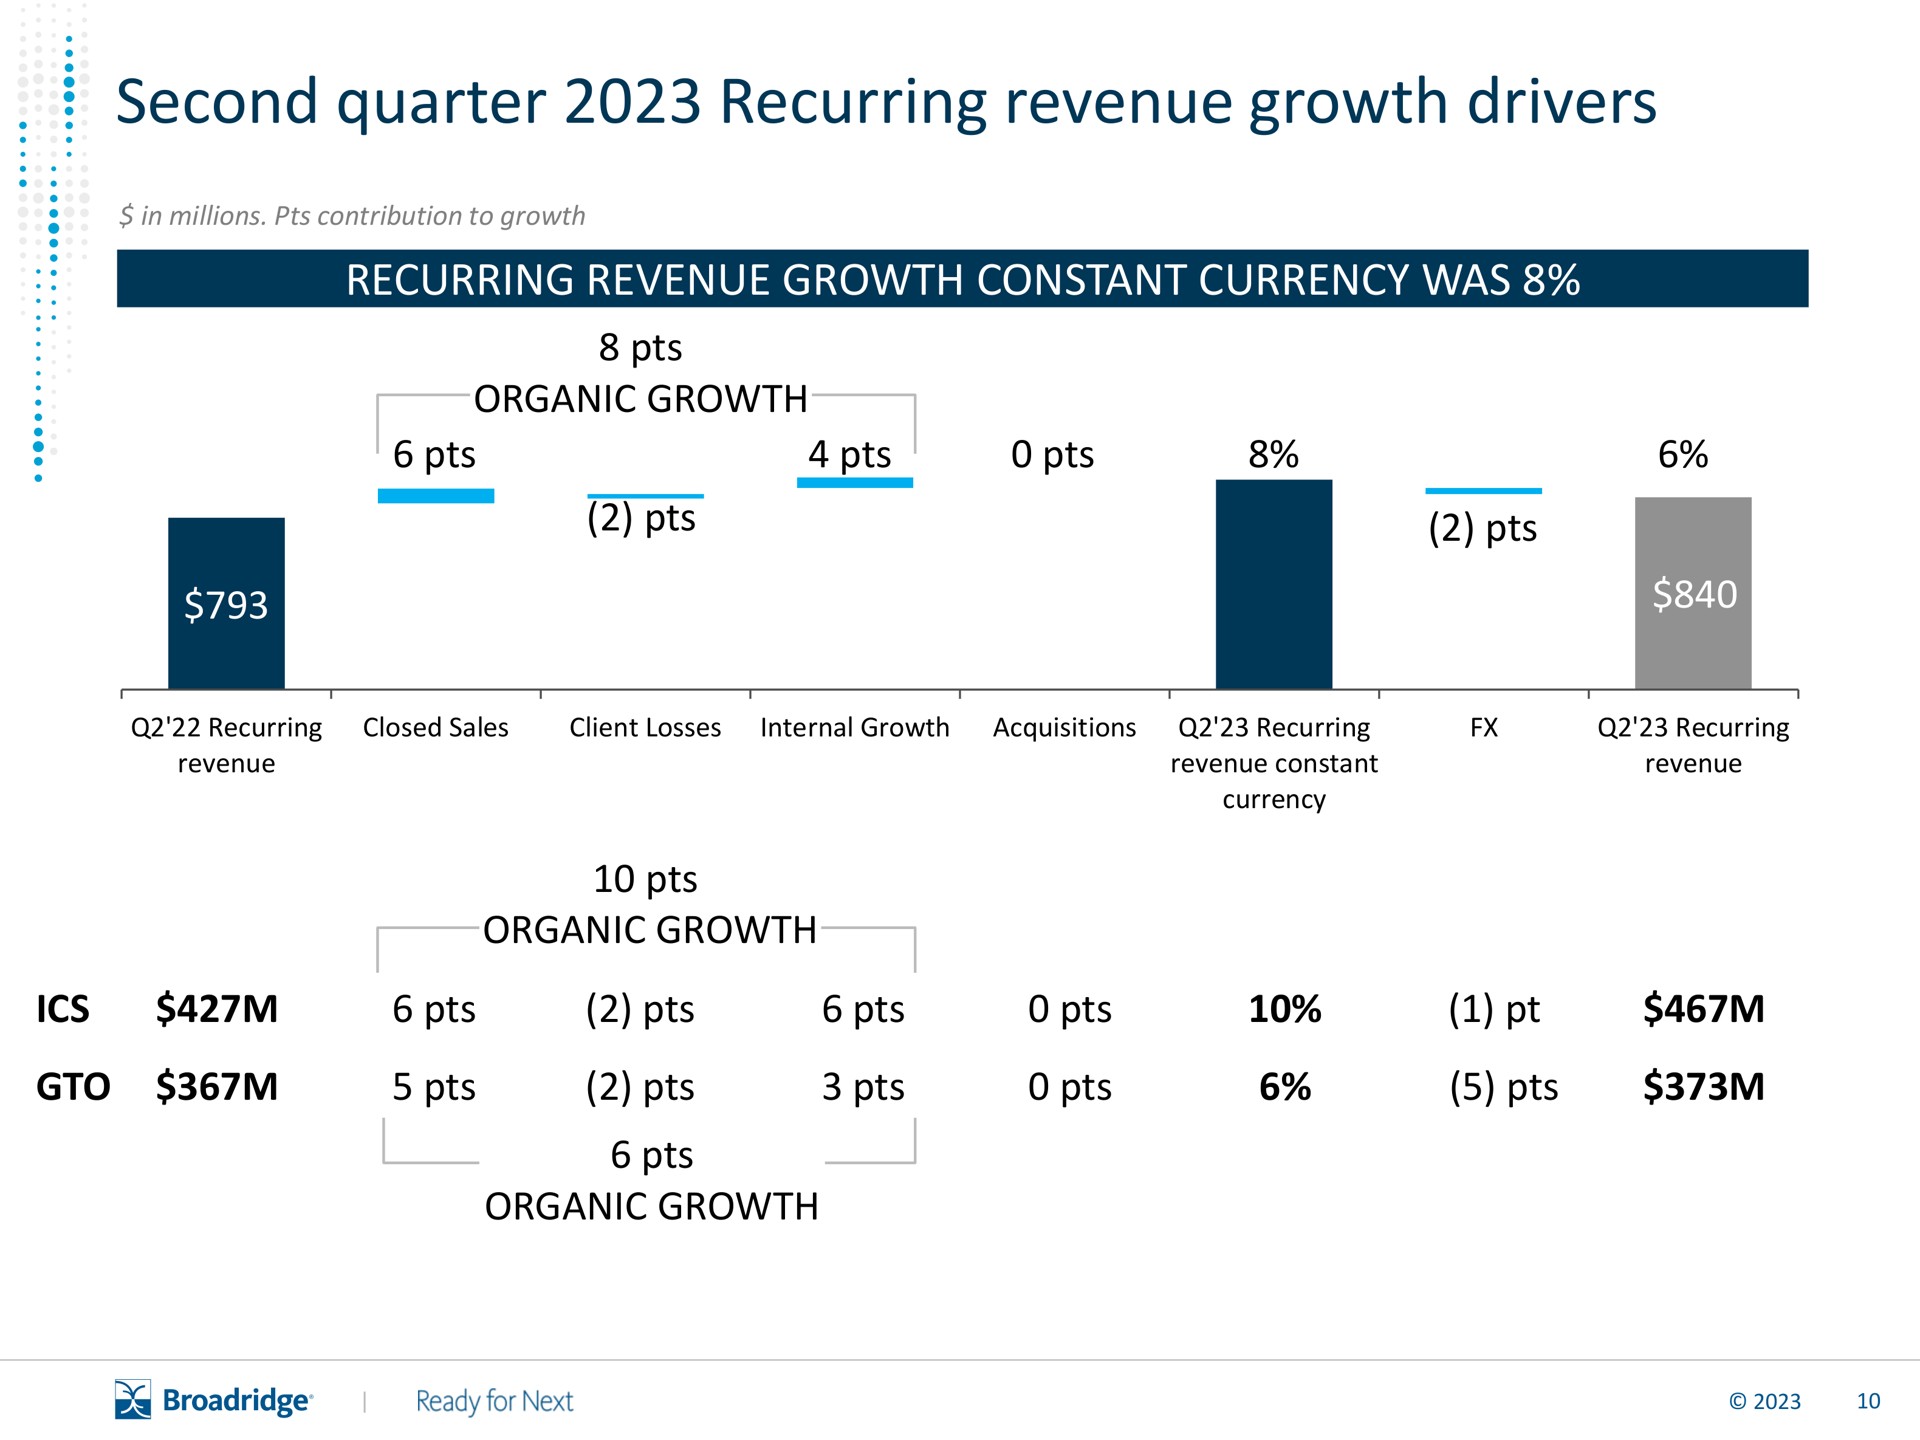 second quarter recurring revenue growth drivers | Broadridge Financial Solutions